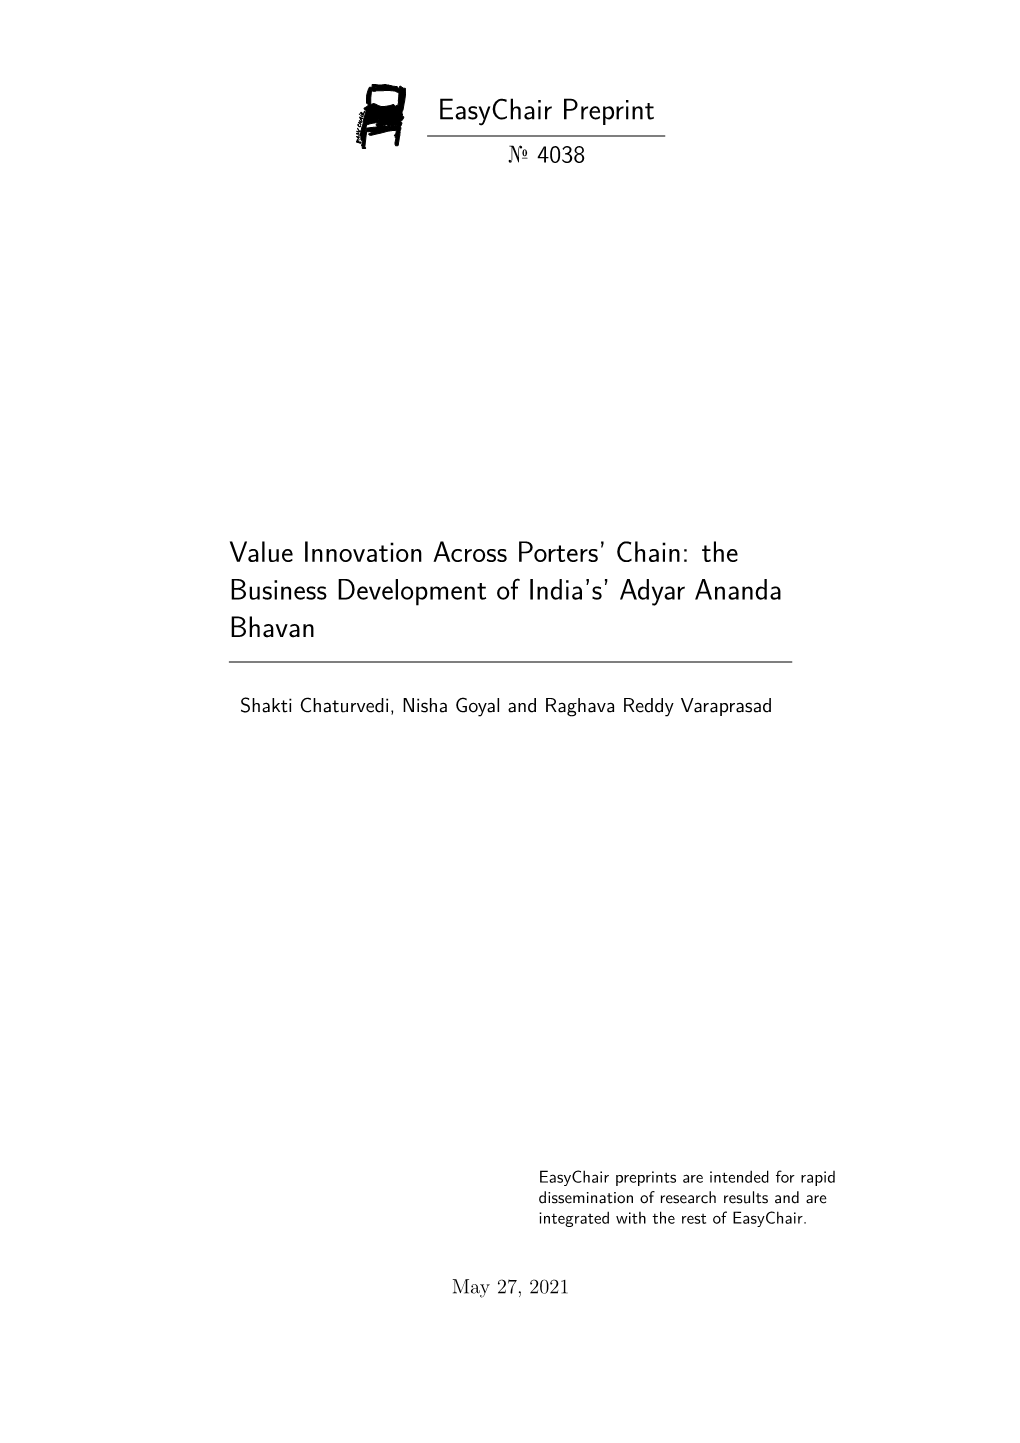 Value Innovation Across Porters' Chain: the Business Development